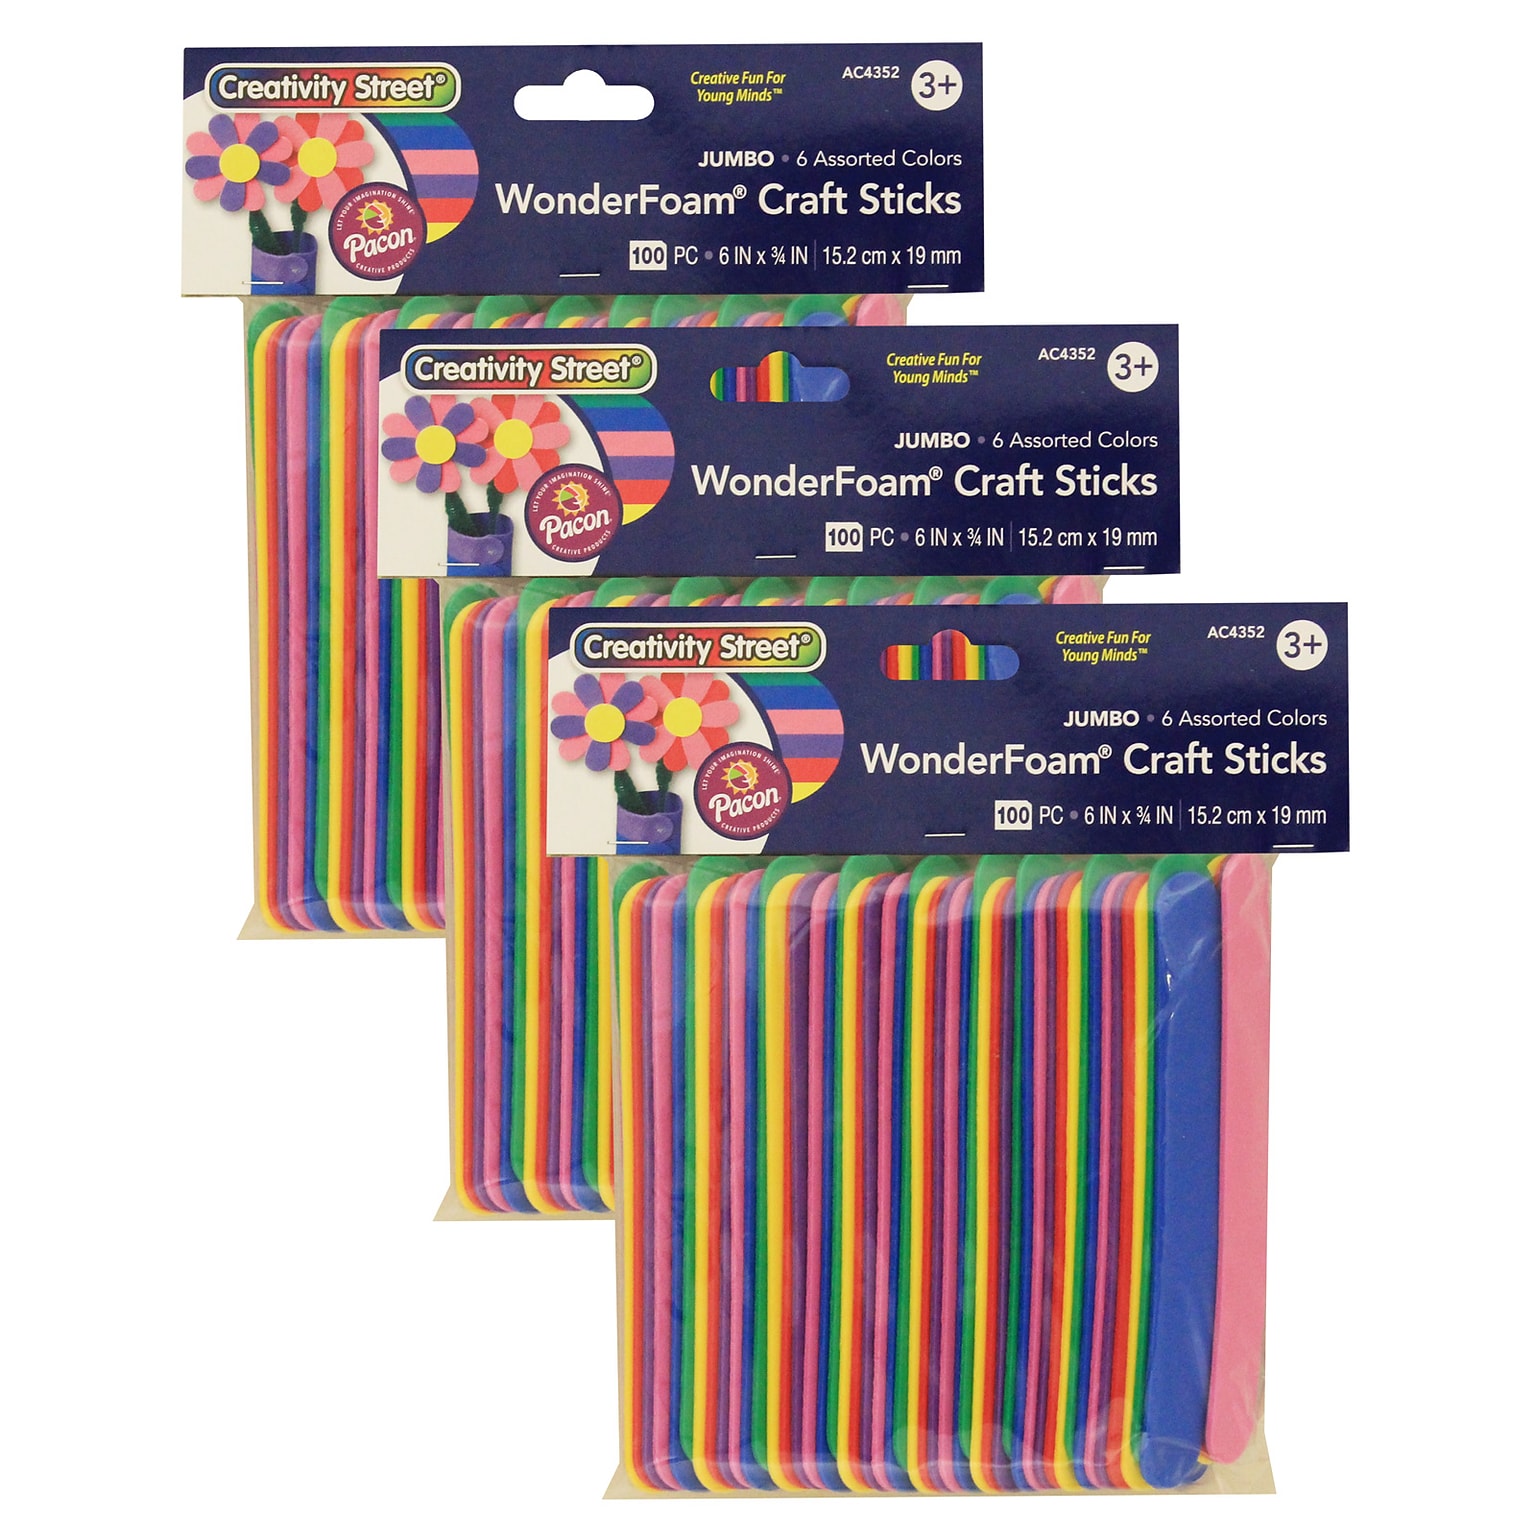 Creativity Street WonderFoam Jumbo Craft Sticks, Assorted Colors, 6 x 3/4, 100/Pack, 3 Packs (PACAC4352-3)